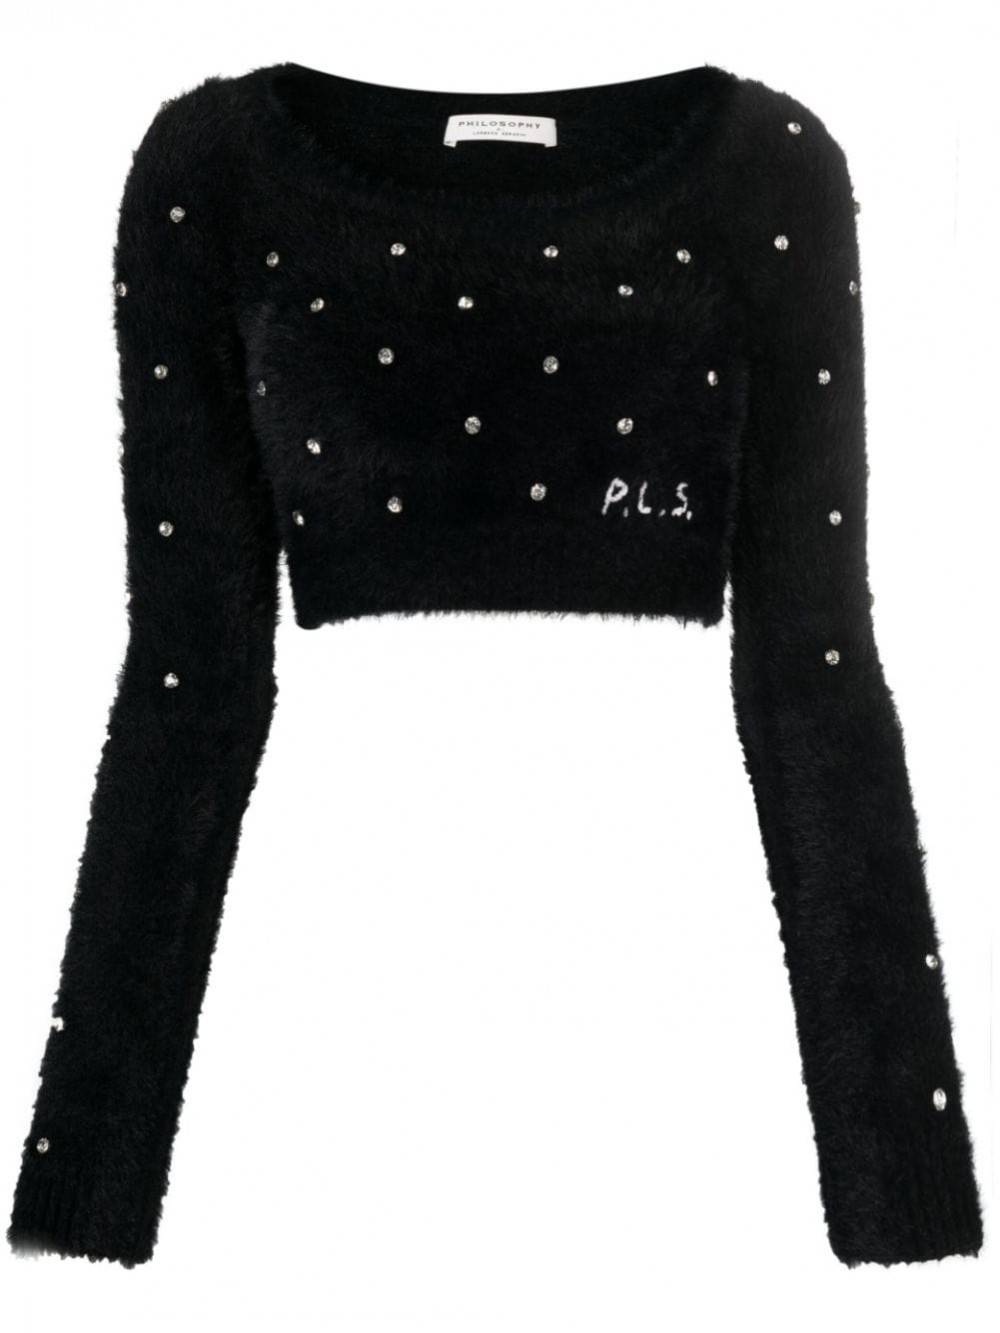 Philosophy di Lorenzo Serafini Black crop sweater with decoration